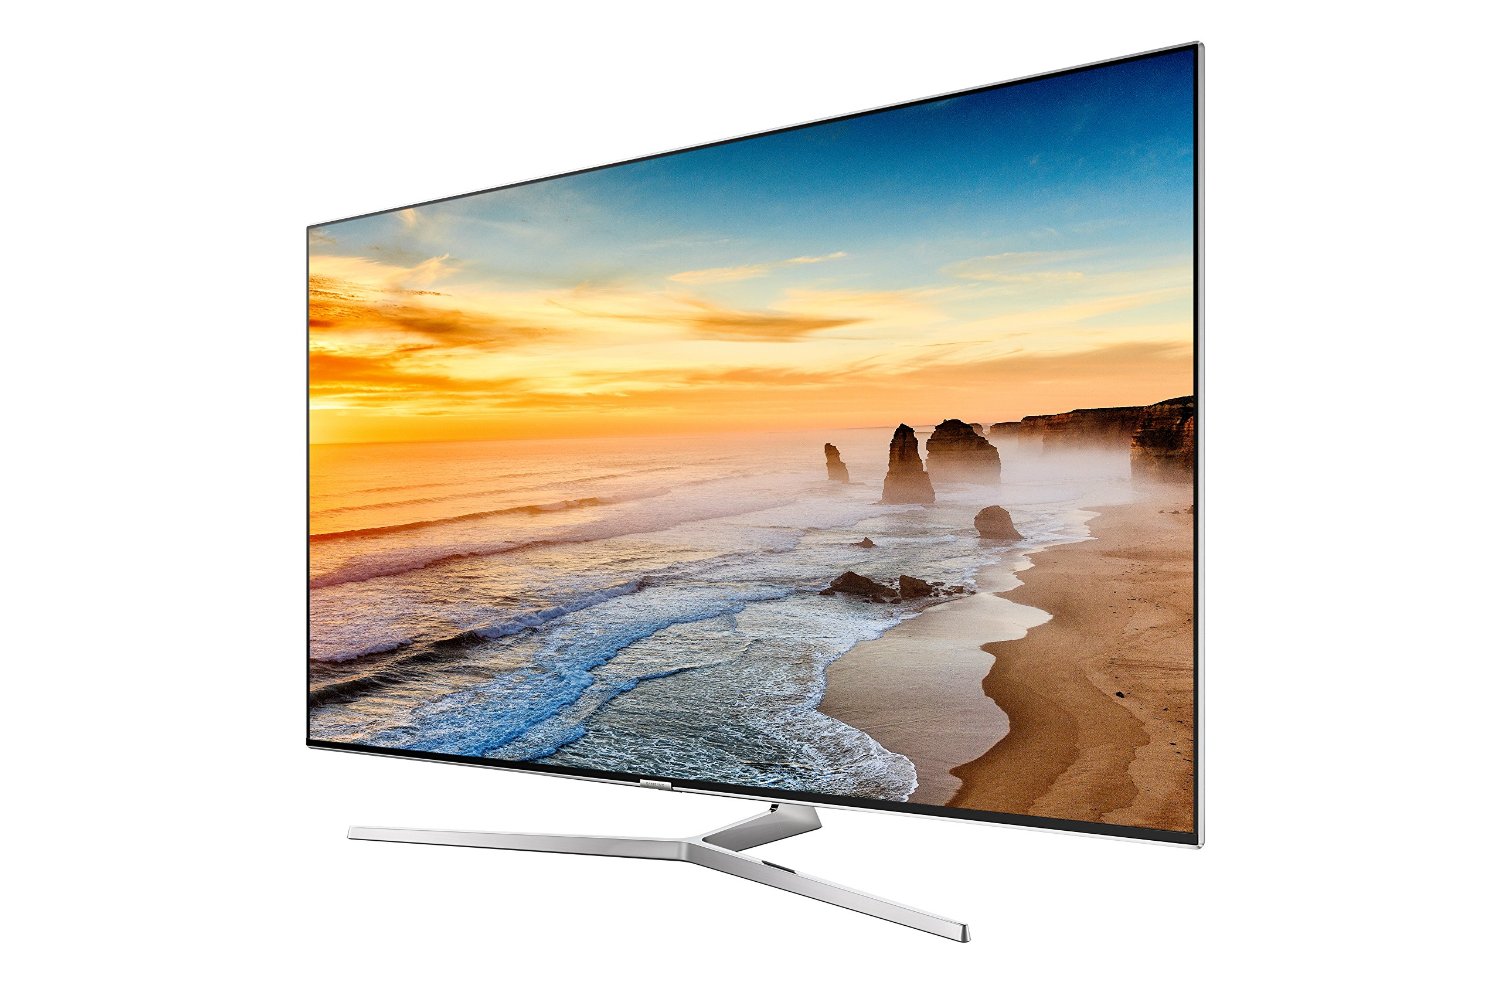 UN65KS9000 65-Inch 4K Ultra HD Smart LED TV (2016 Model)